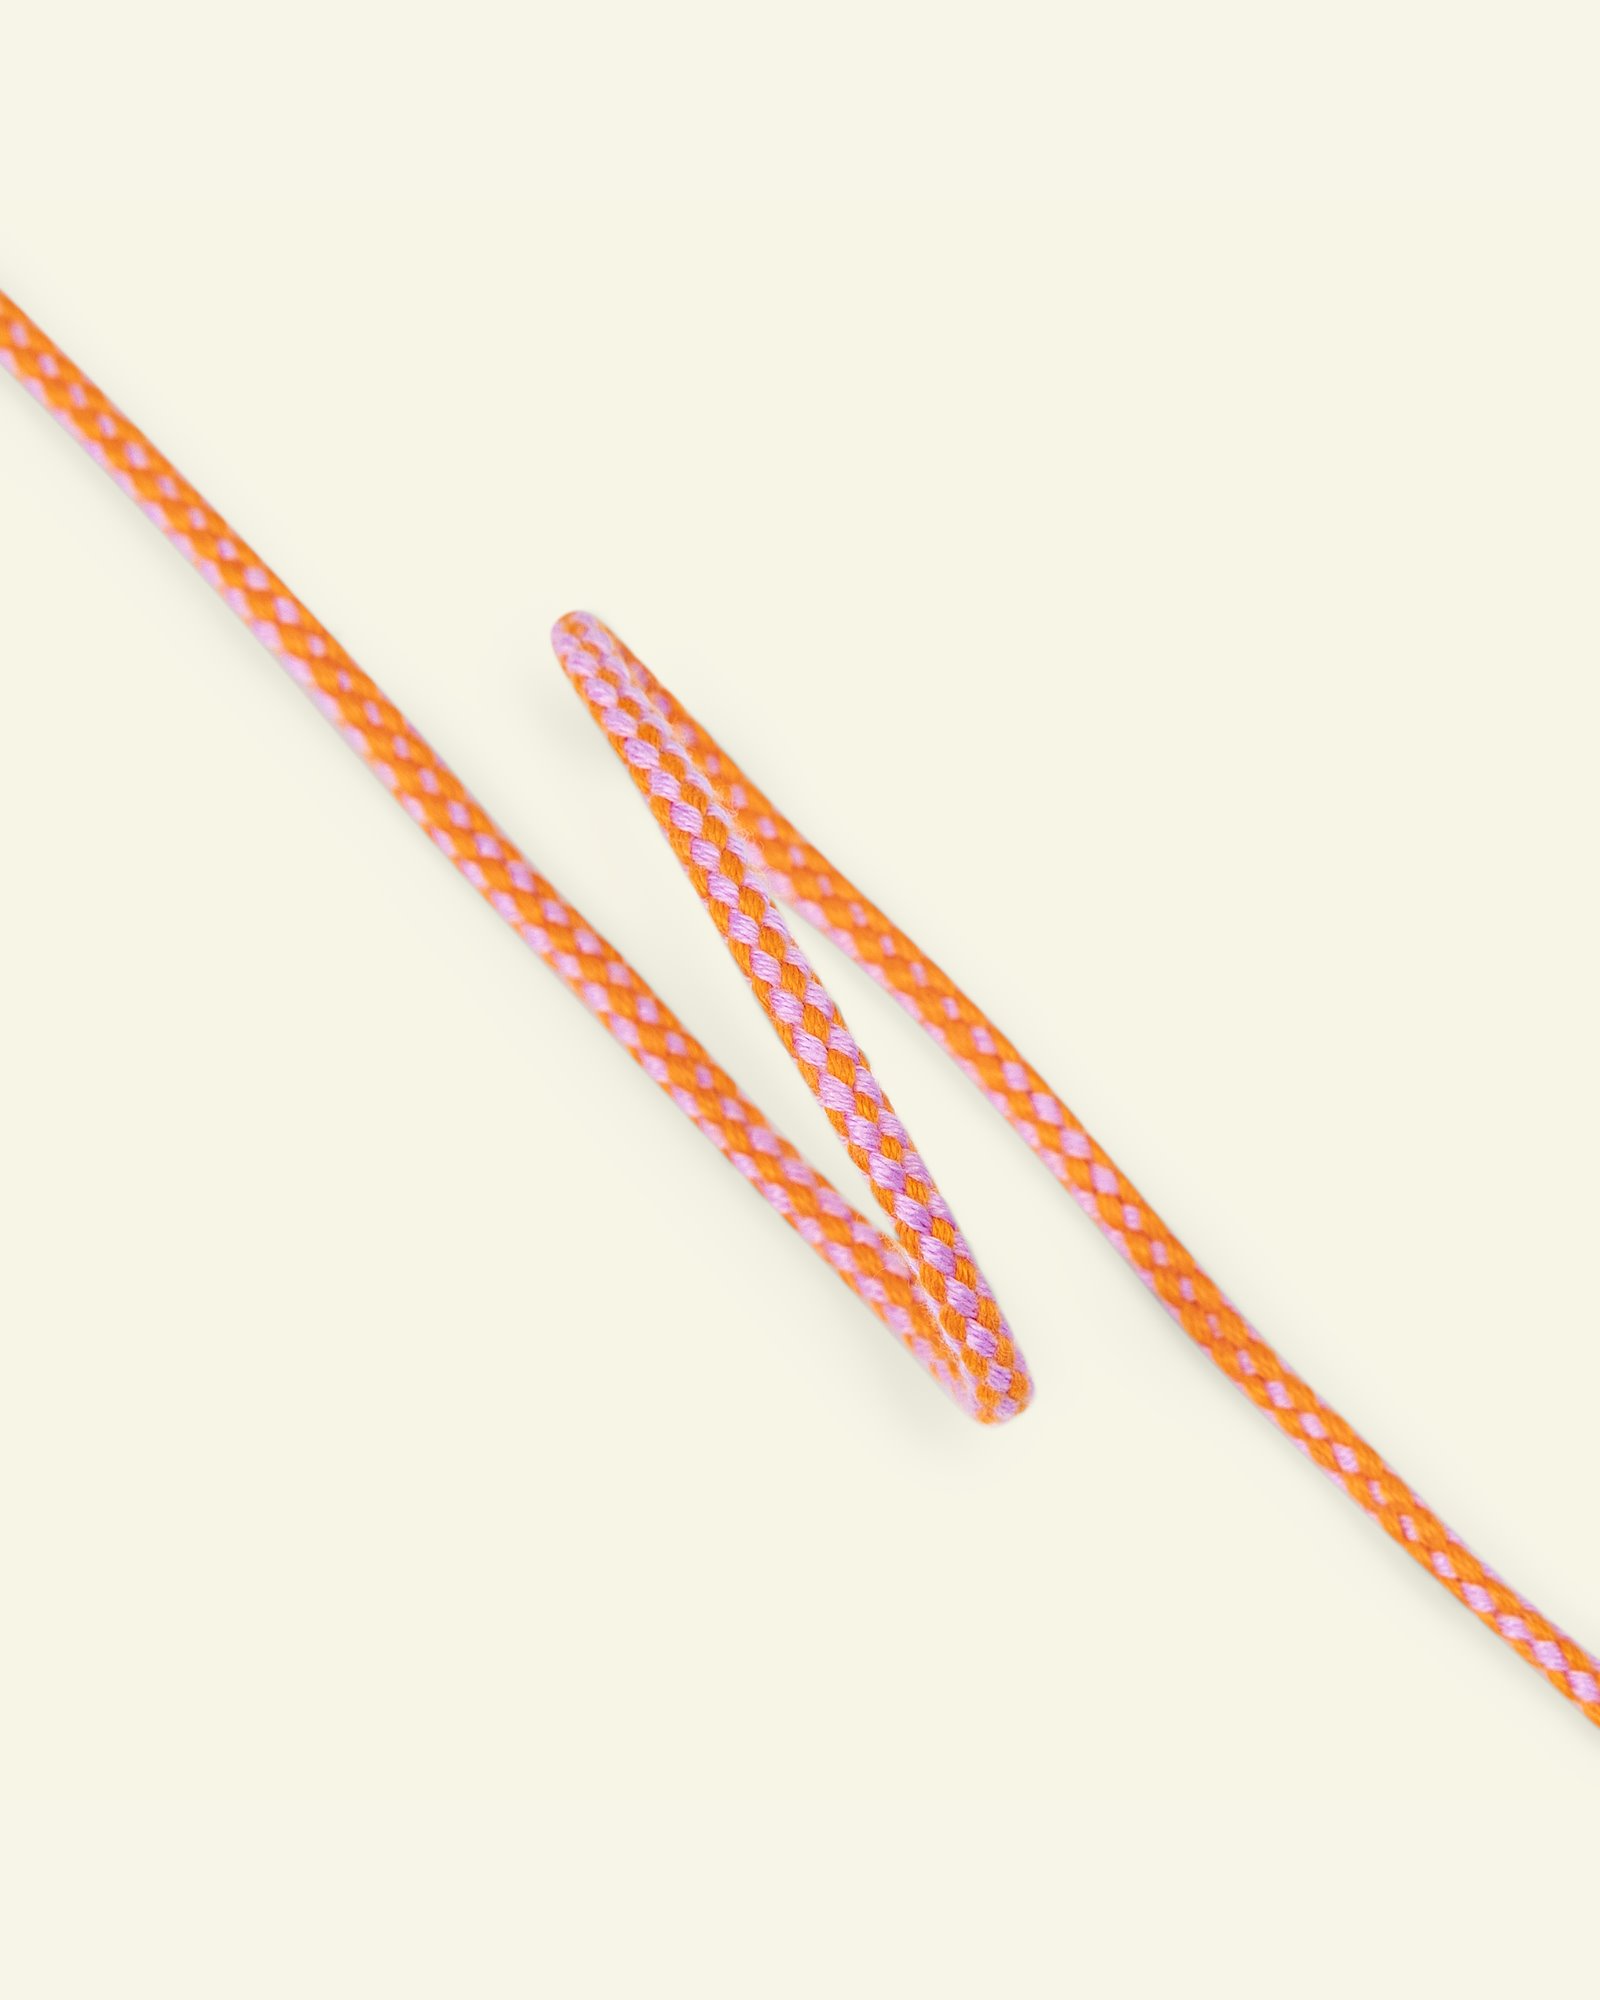 Anorak cord 3,5mm pink/orange 5m 75004_pack